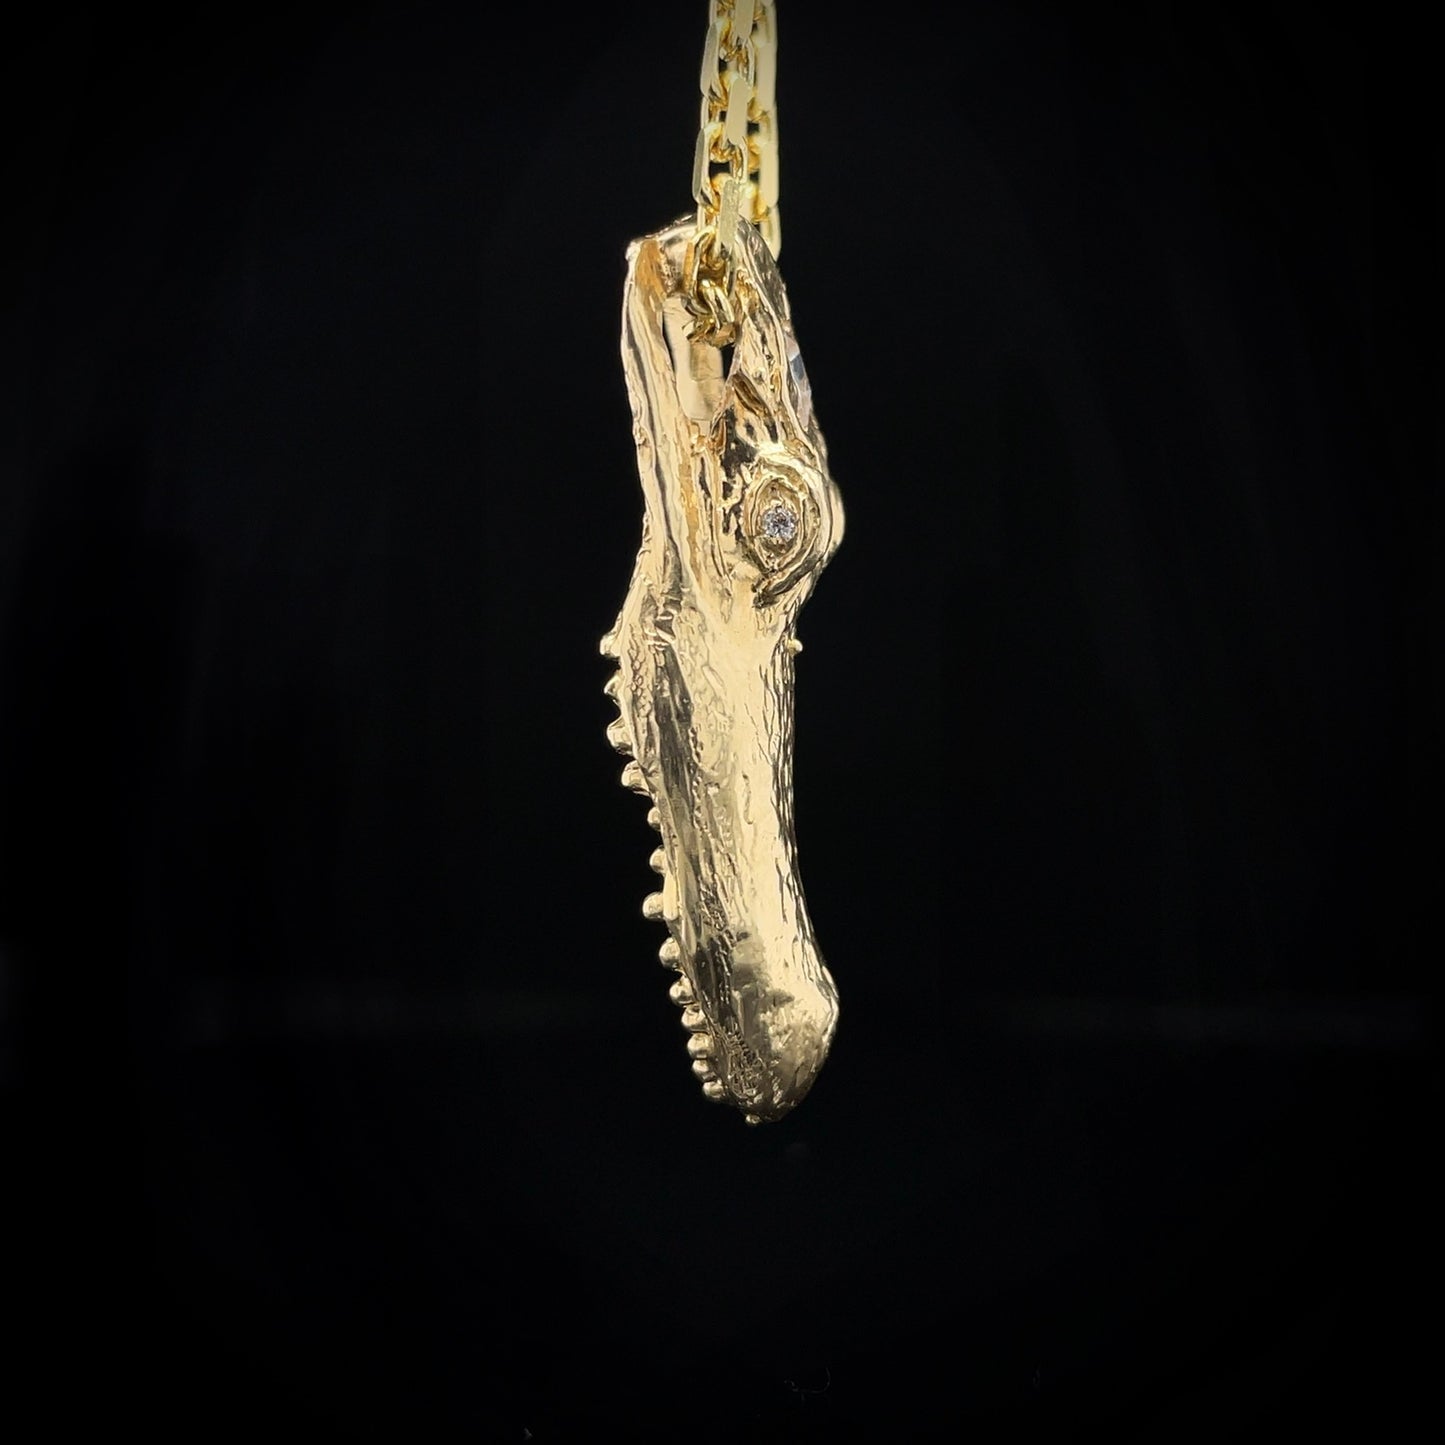 Magical Alligator Necklace w/ Diamond Eyes